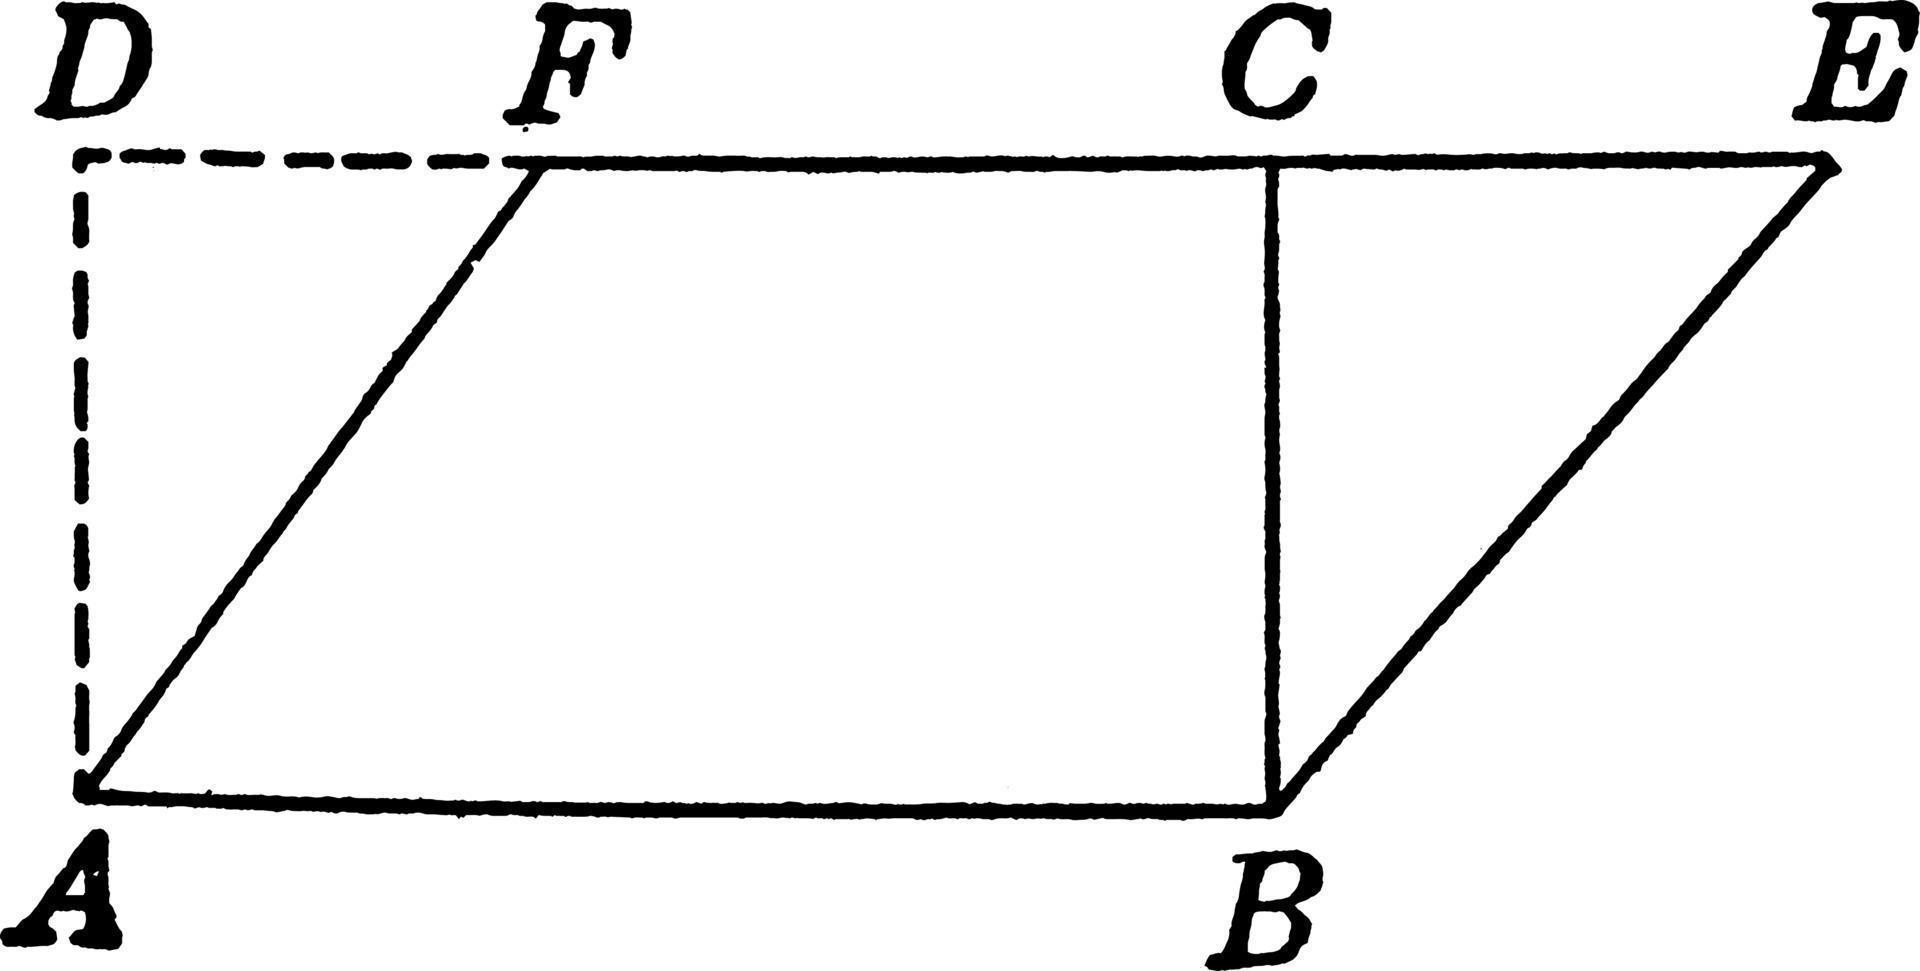 Parallelogram and Rectangle, vintage illustration. vector